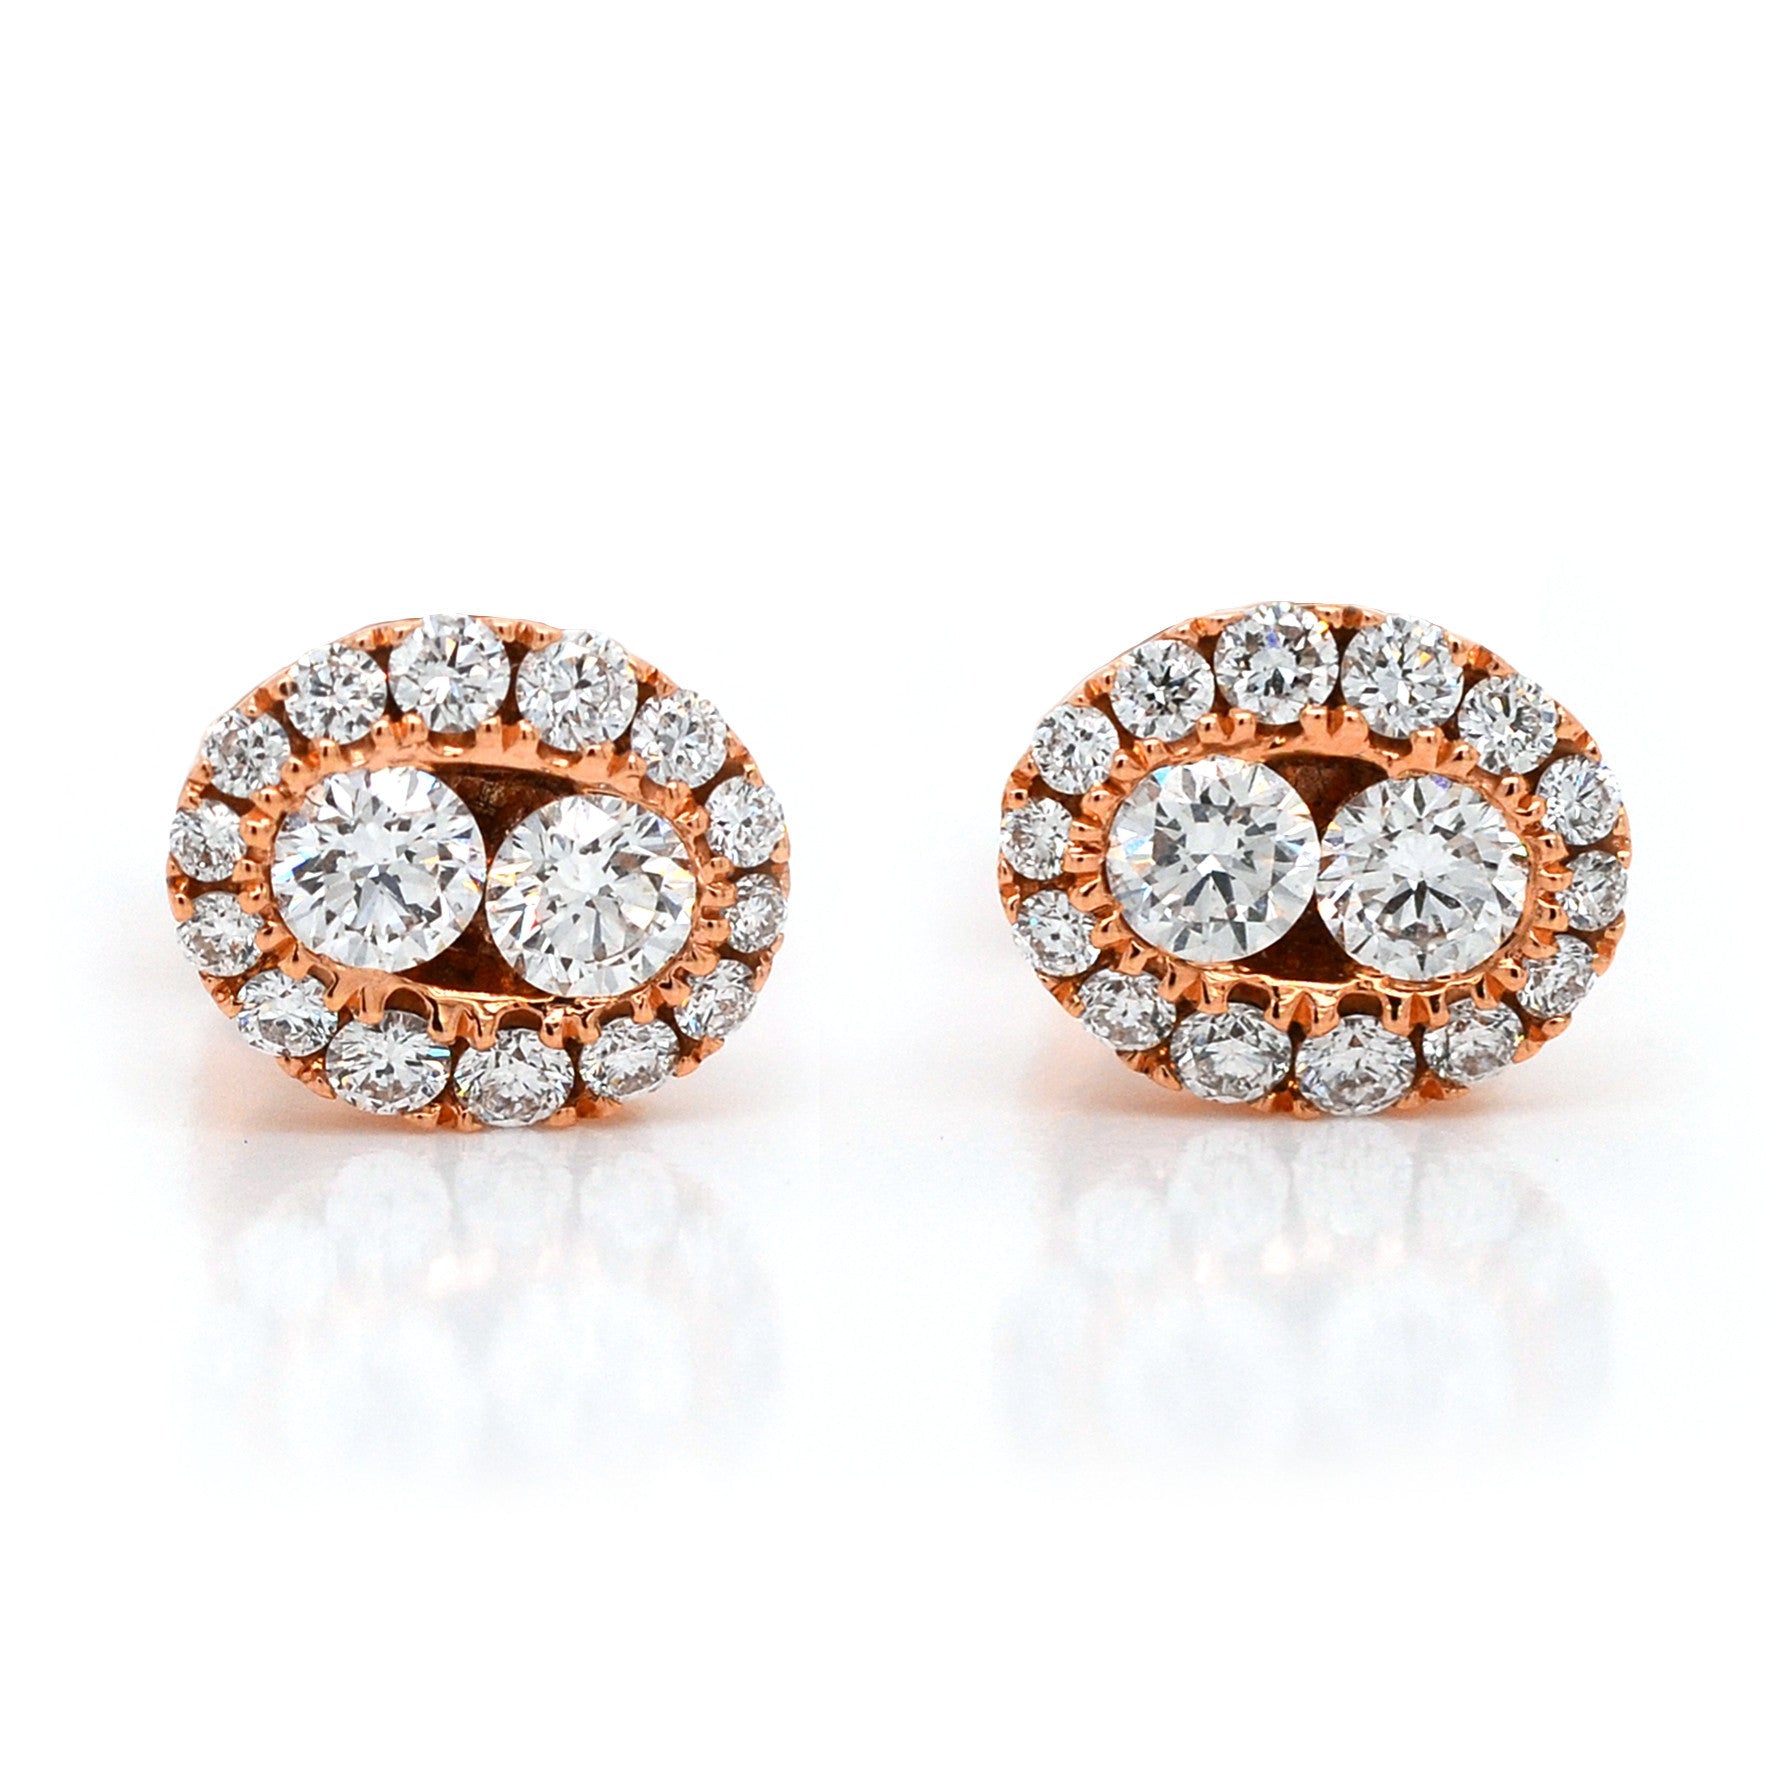 Oval Diamond Stud Earrings in Rose Gold - ForeverJewels Design Studio 8